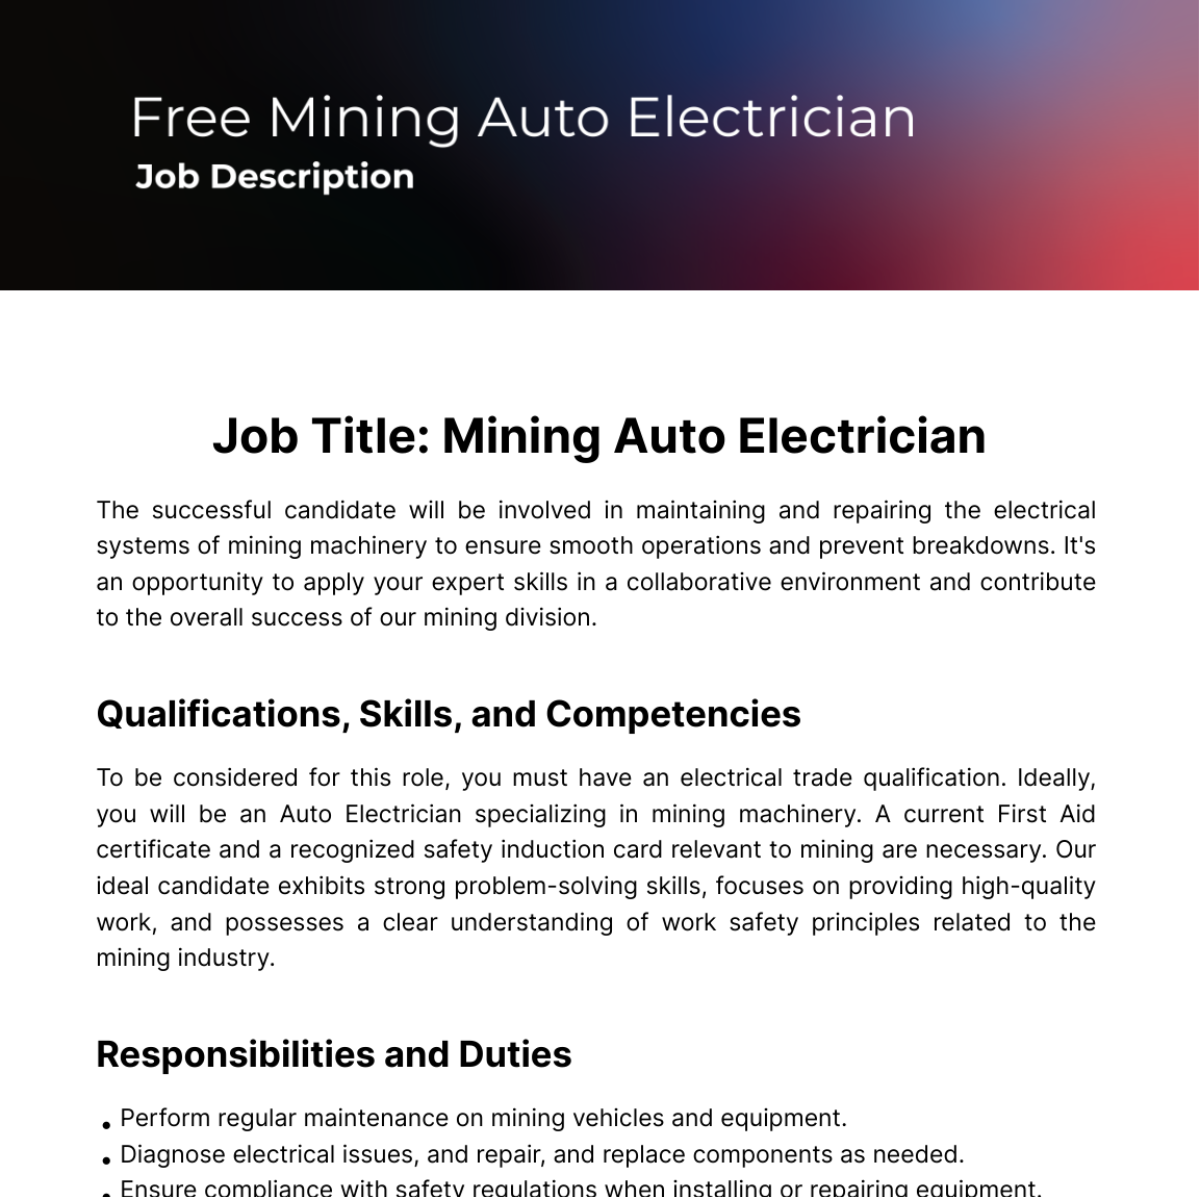 Free Mining Auto Electrician Job Description Template